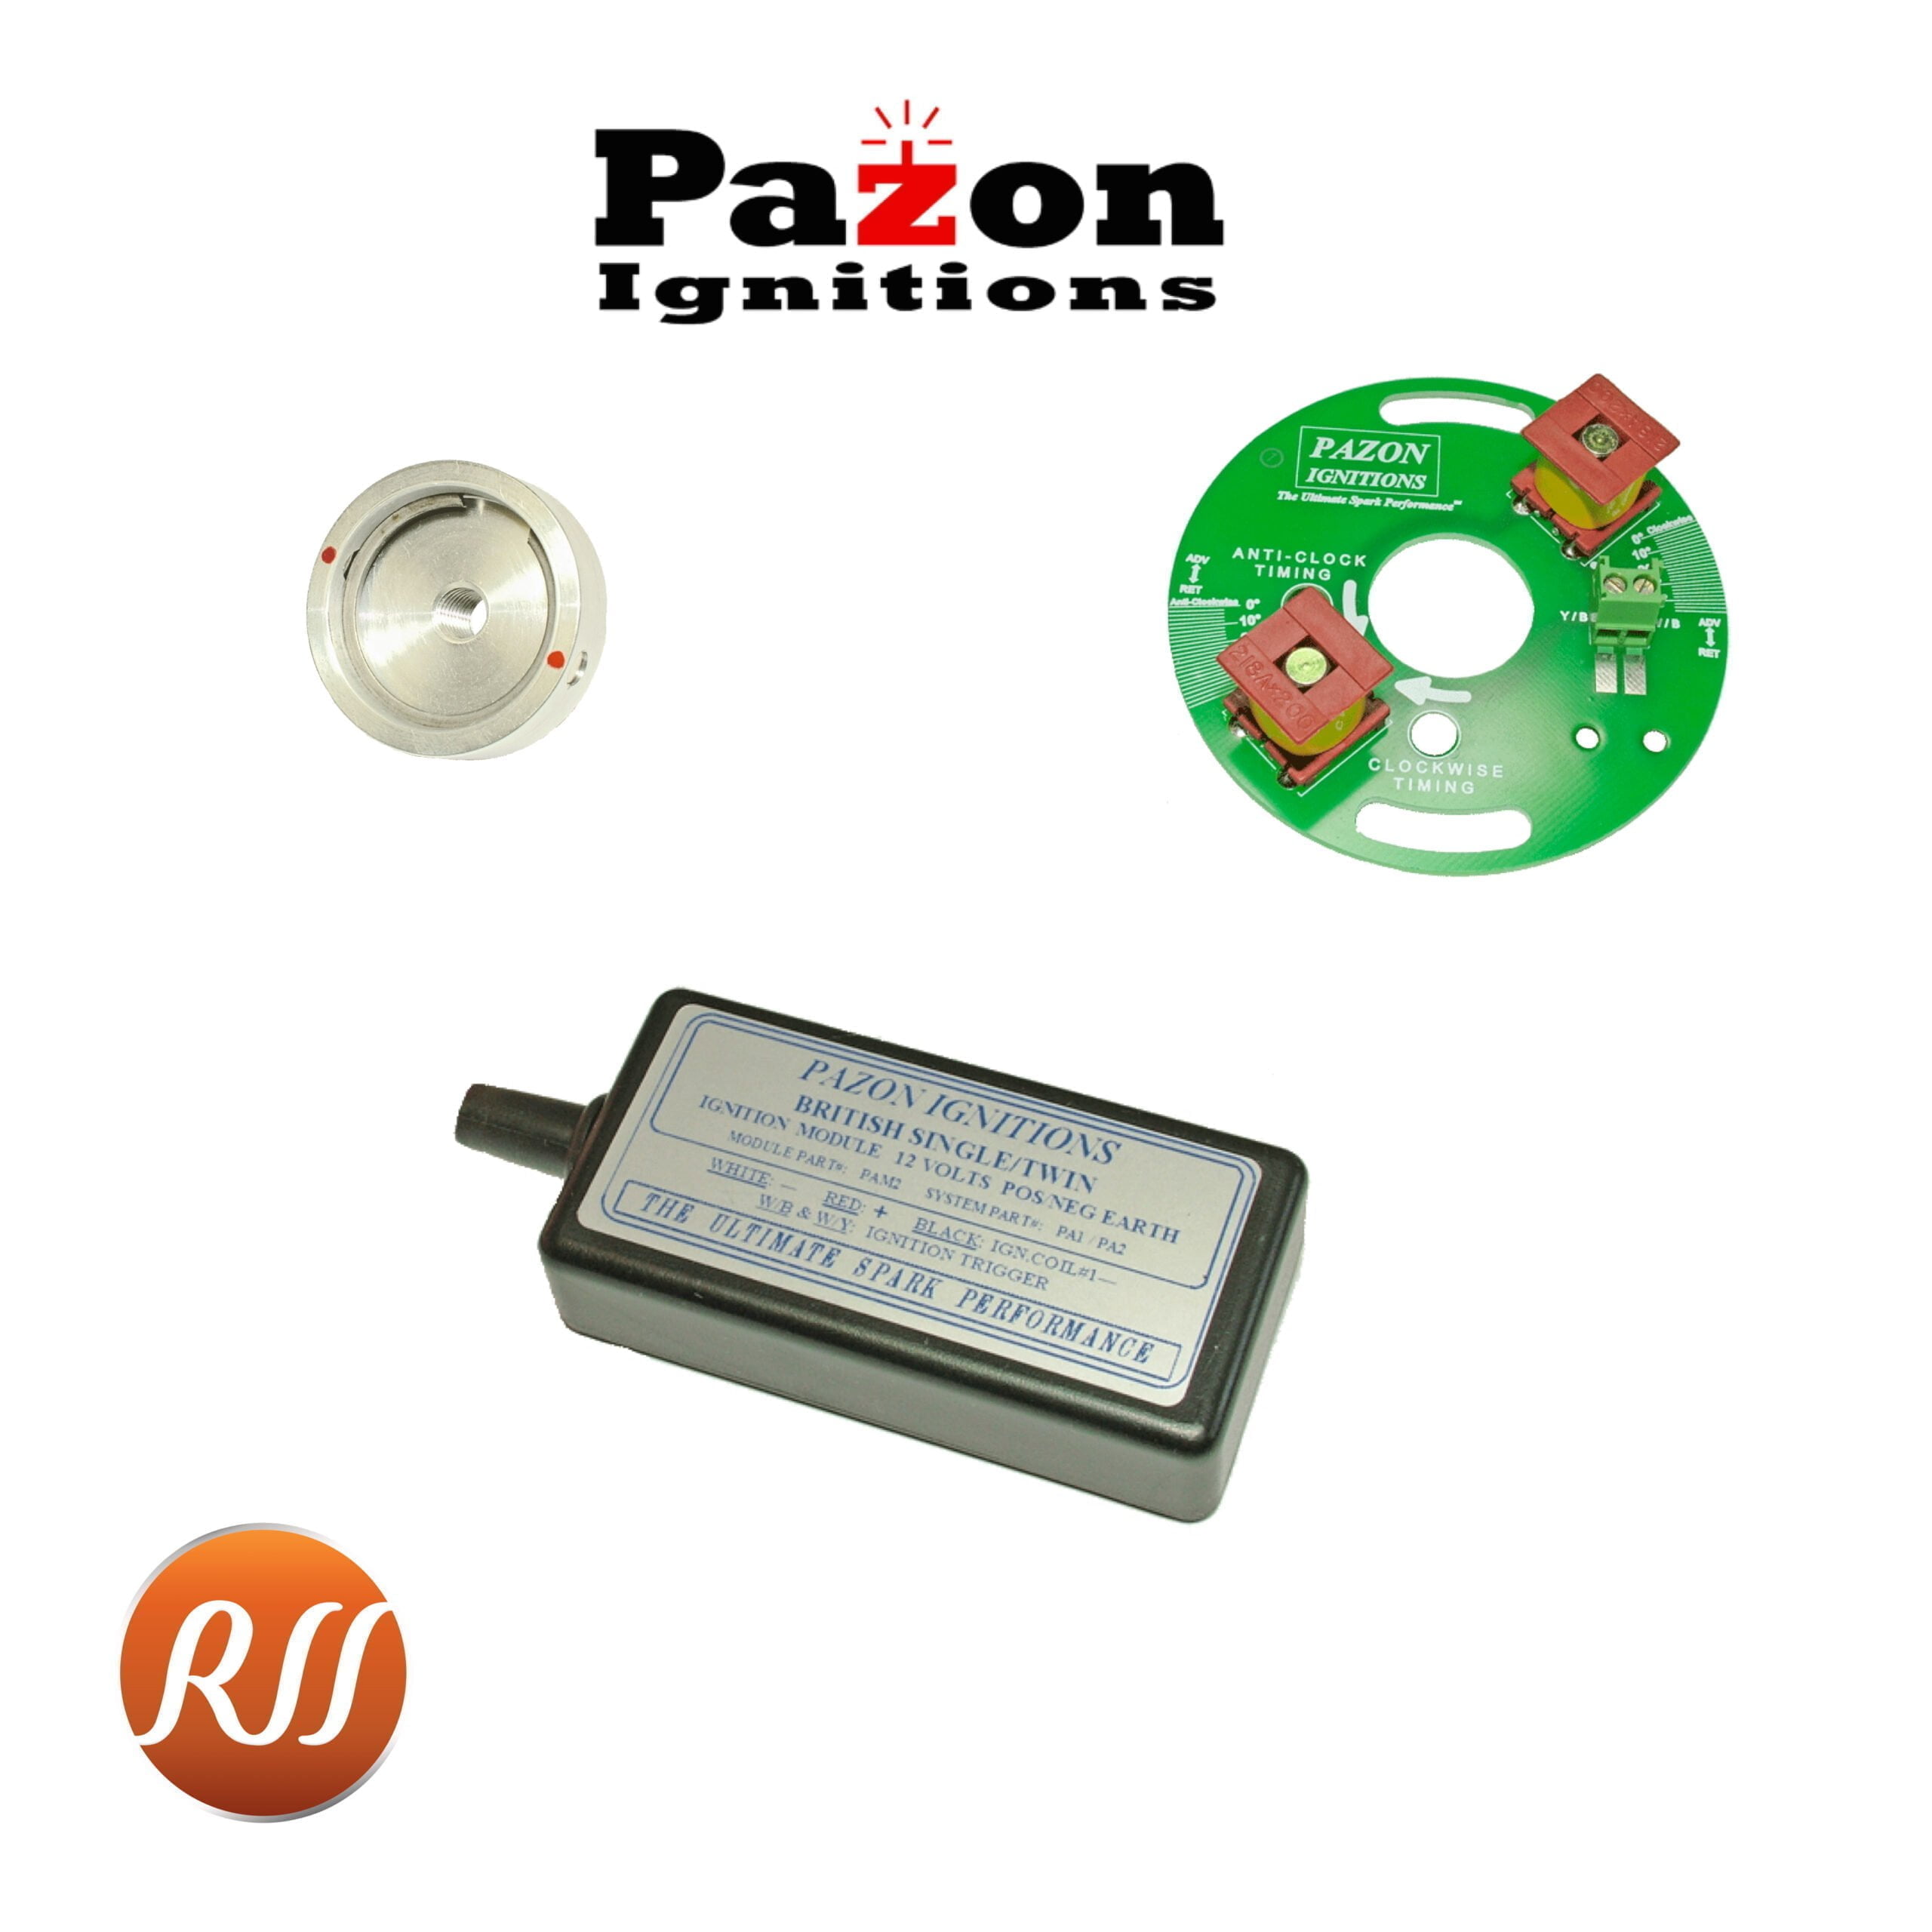 Pazon Ignition Kit